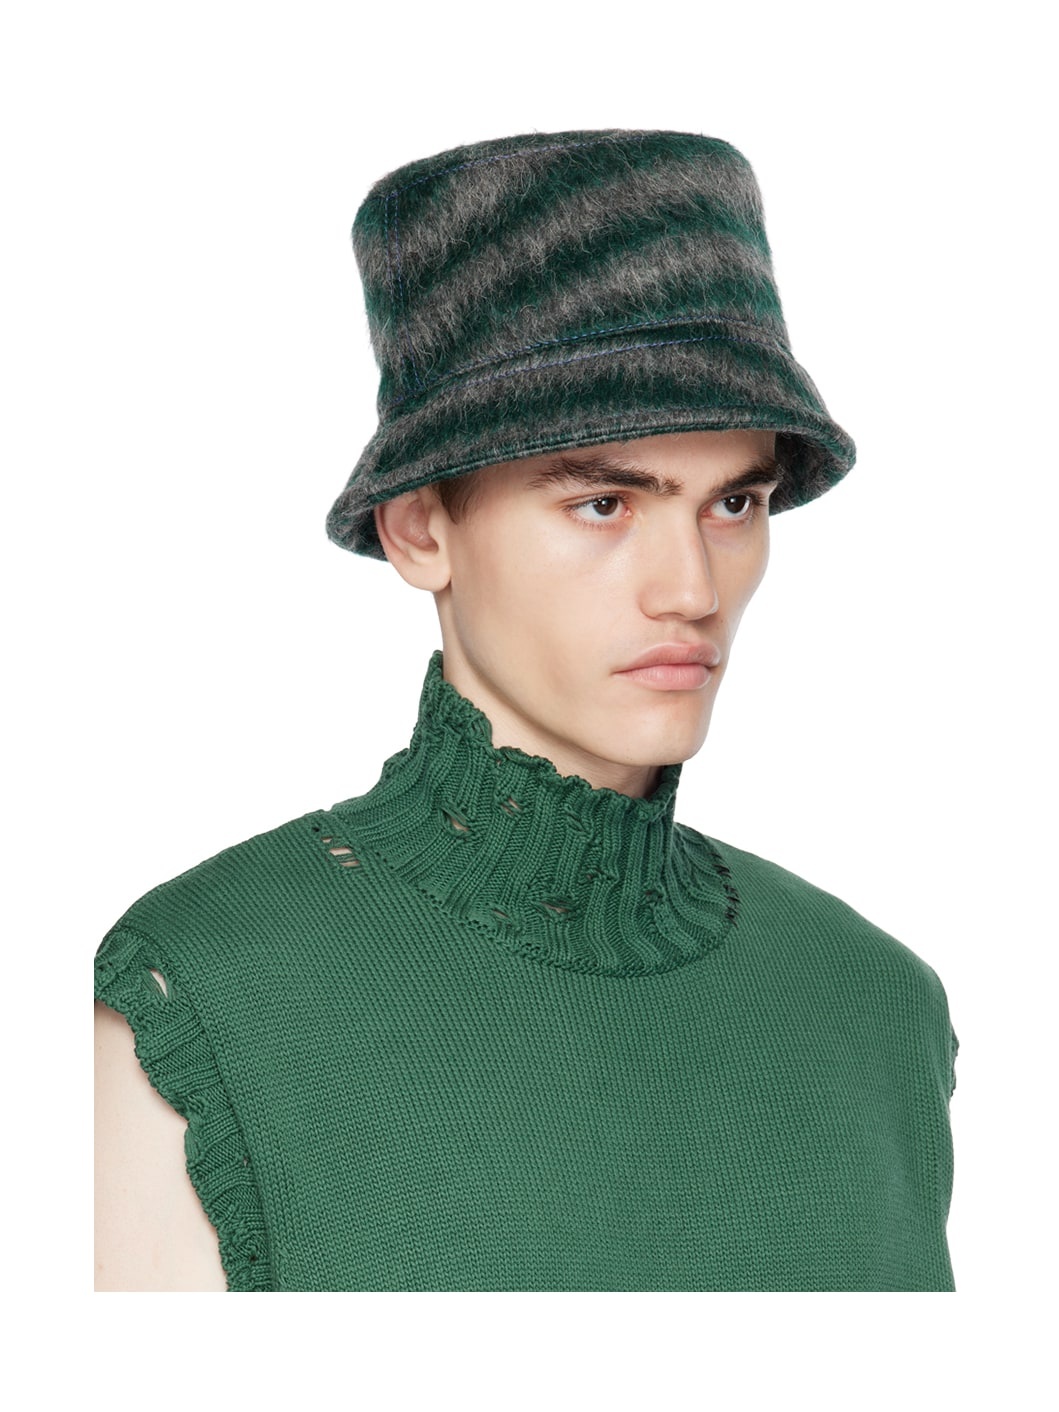 Green & Gray Striped Bucket Hat - 2